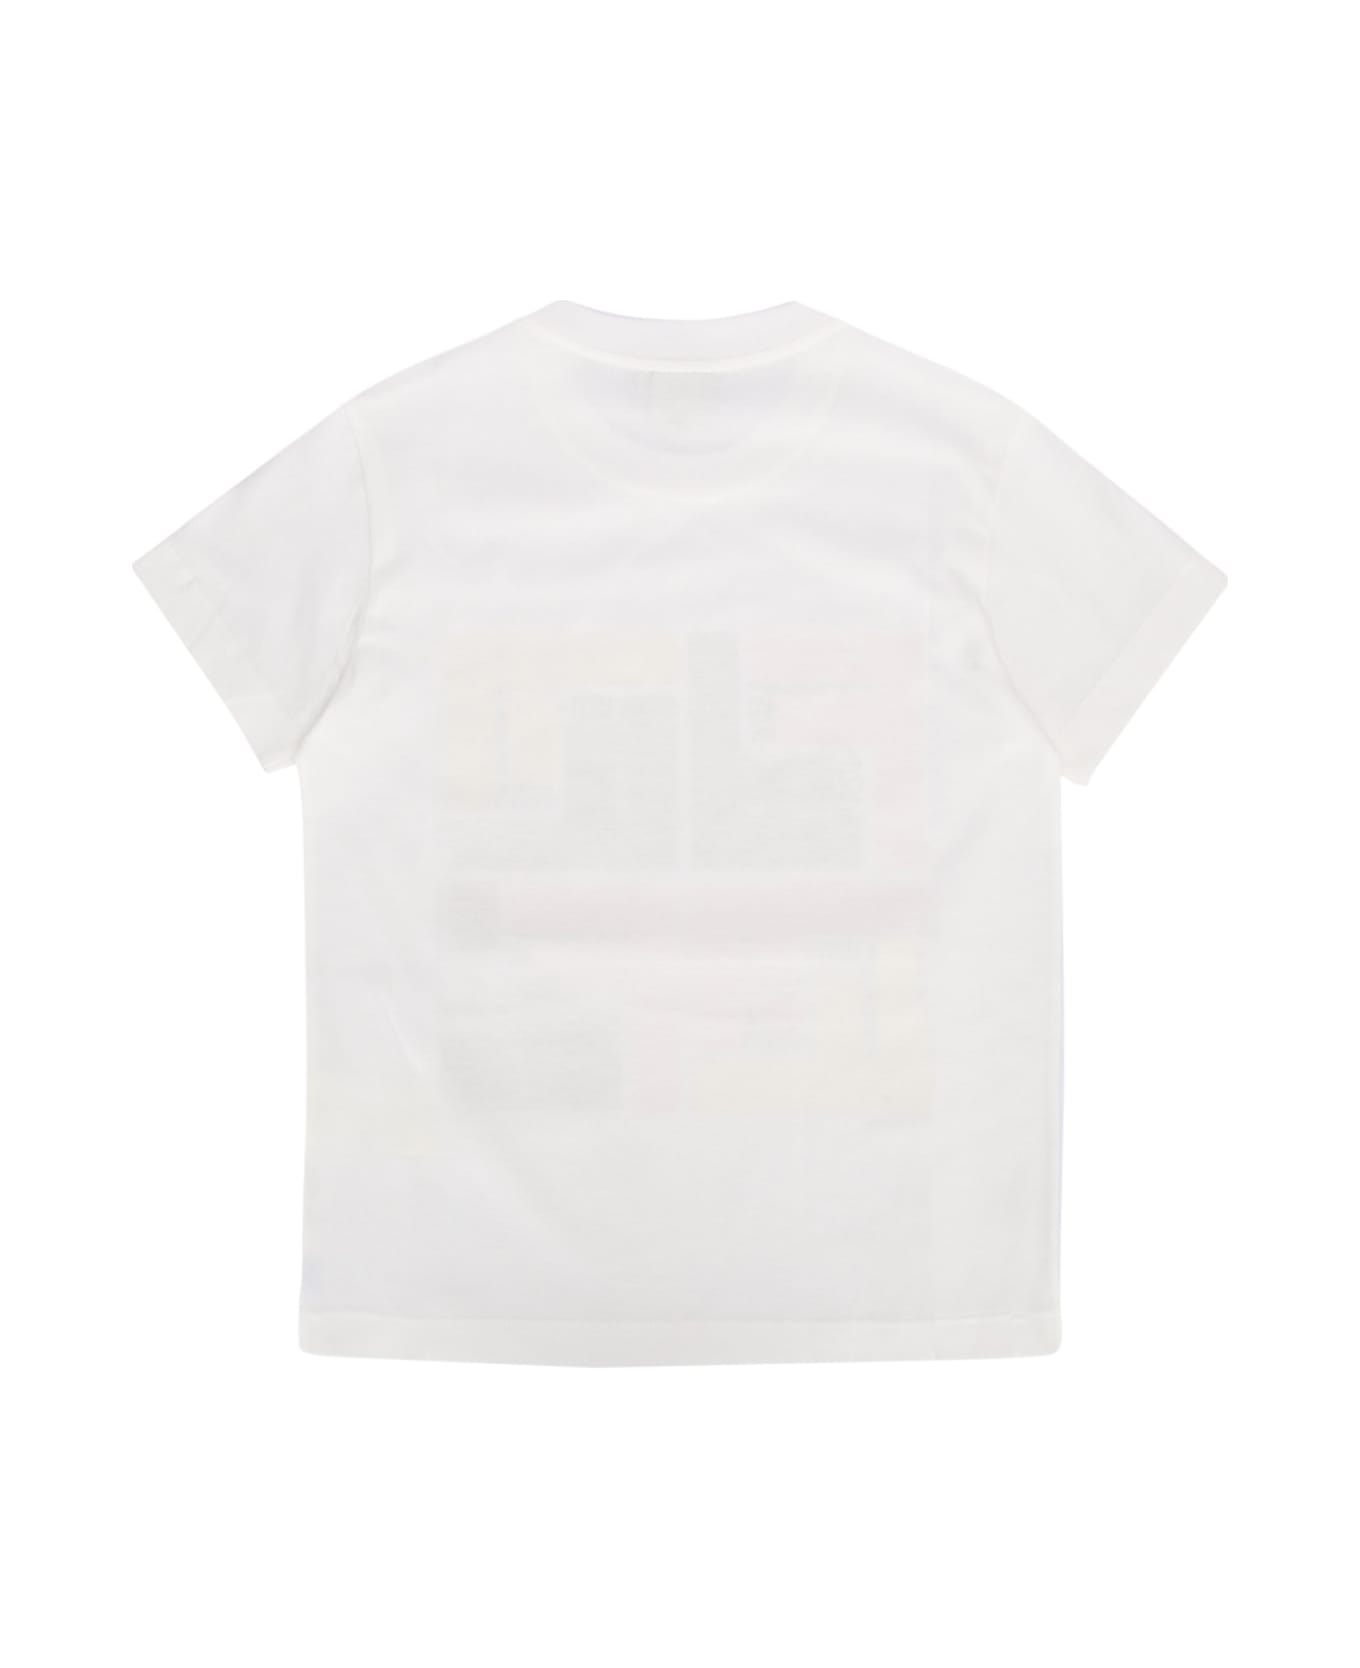 Fendi T-shirt - GESSOCONFETTOMULTI